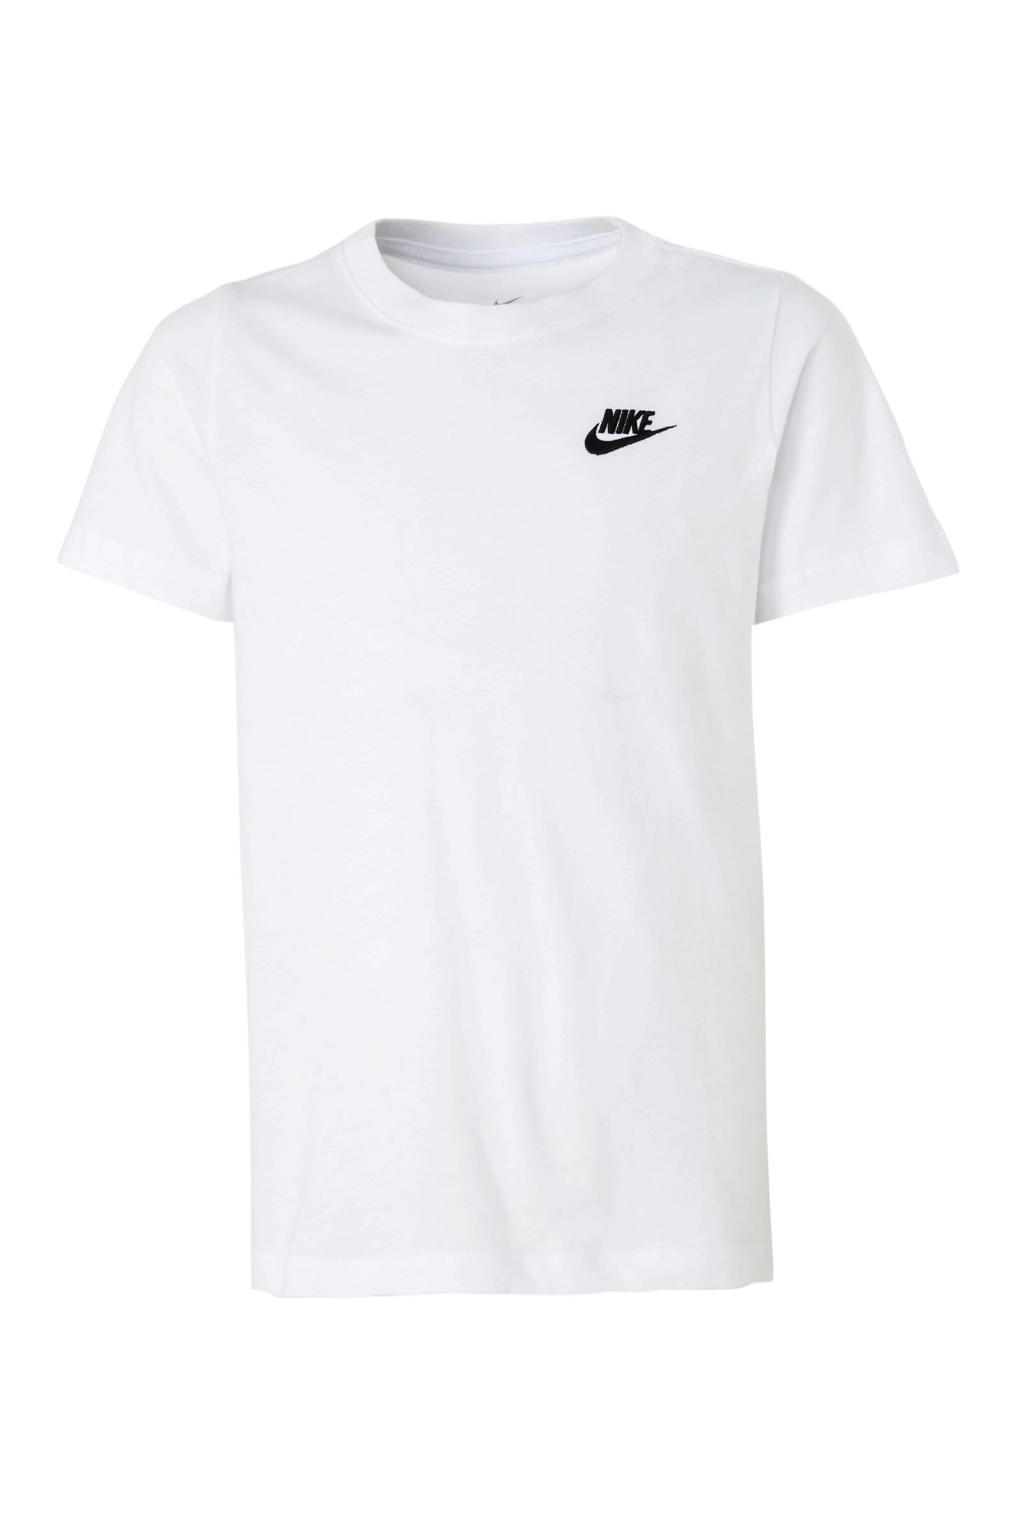 Nike T-shirt wit